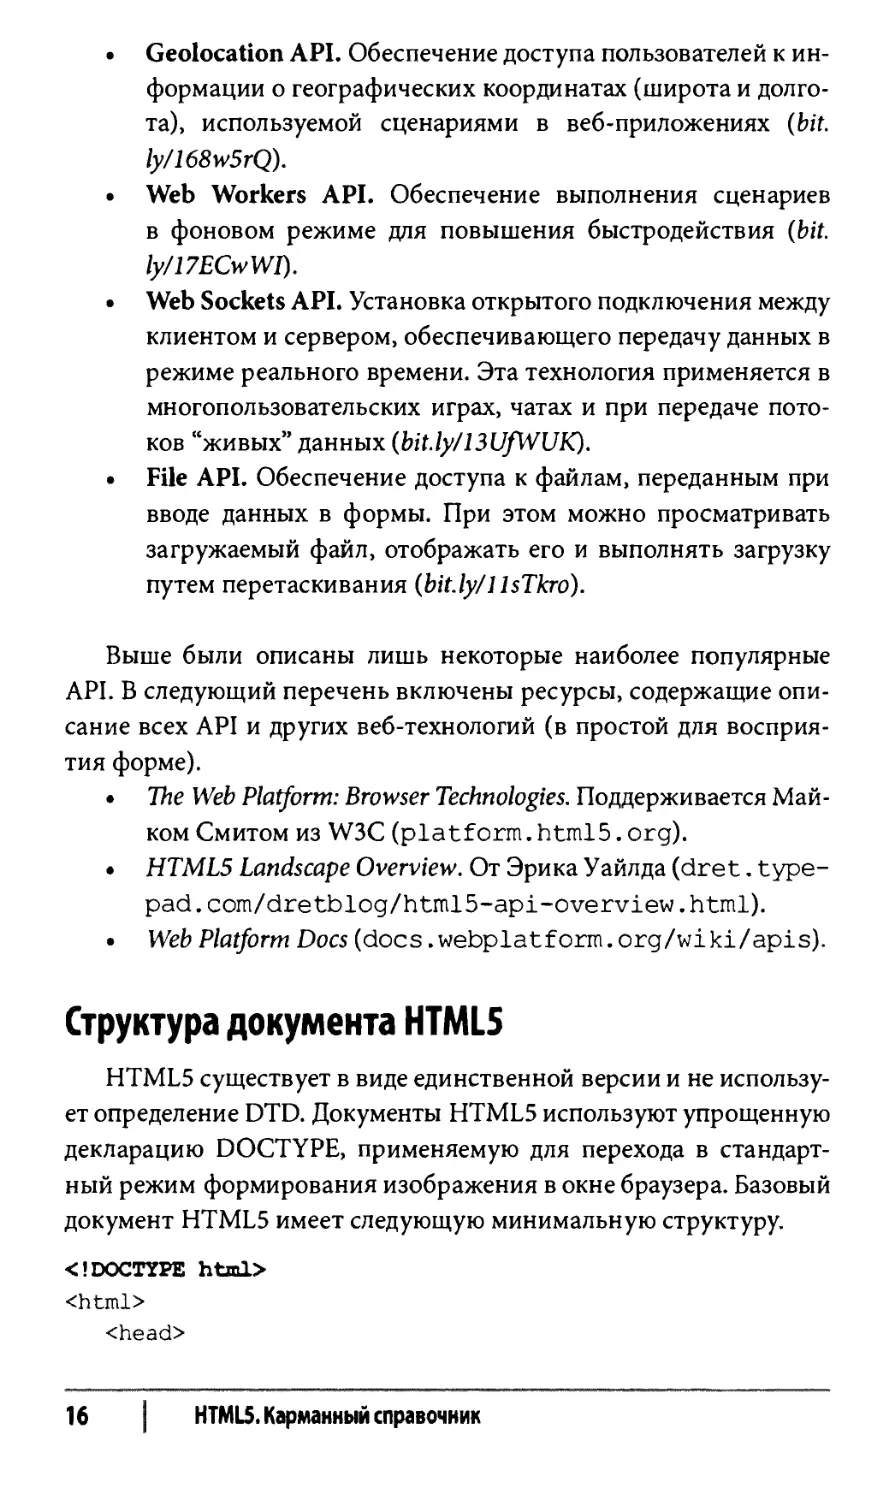 Структура документа HTML5